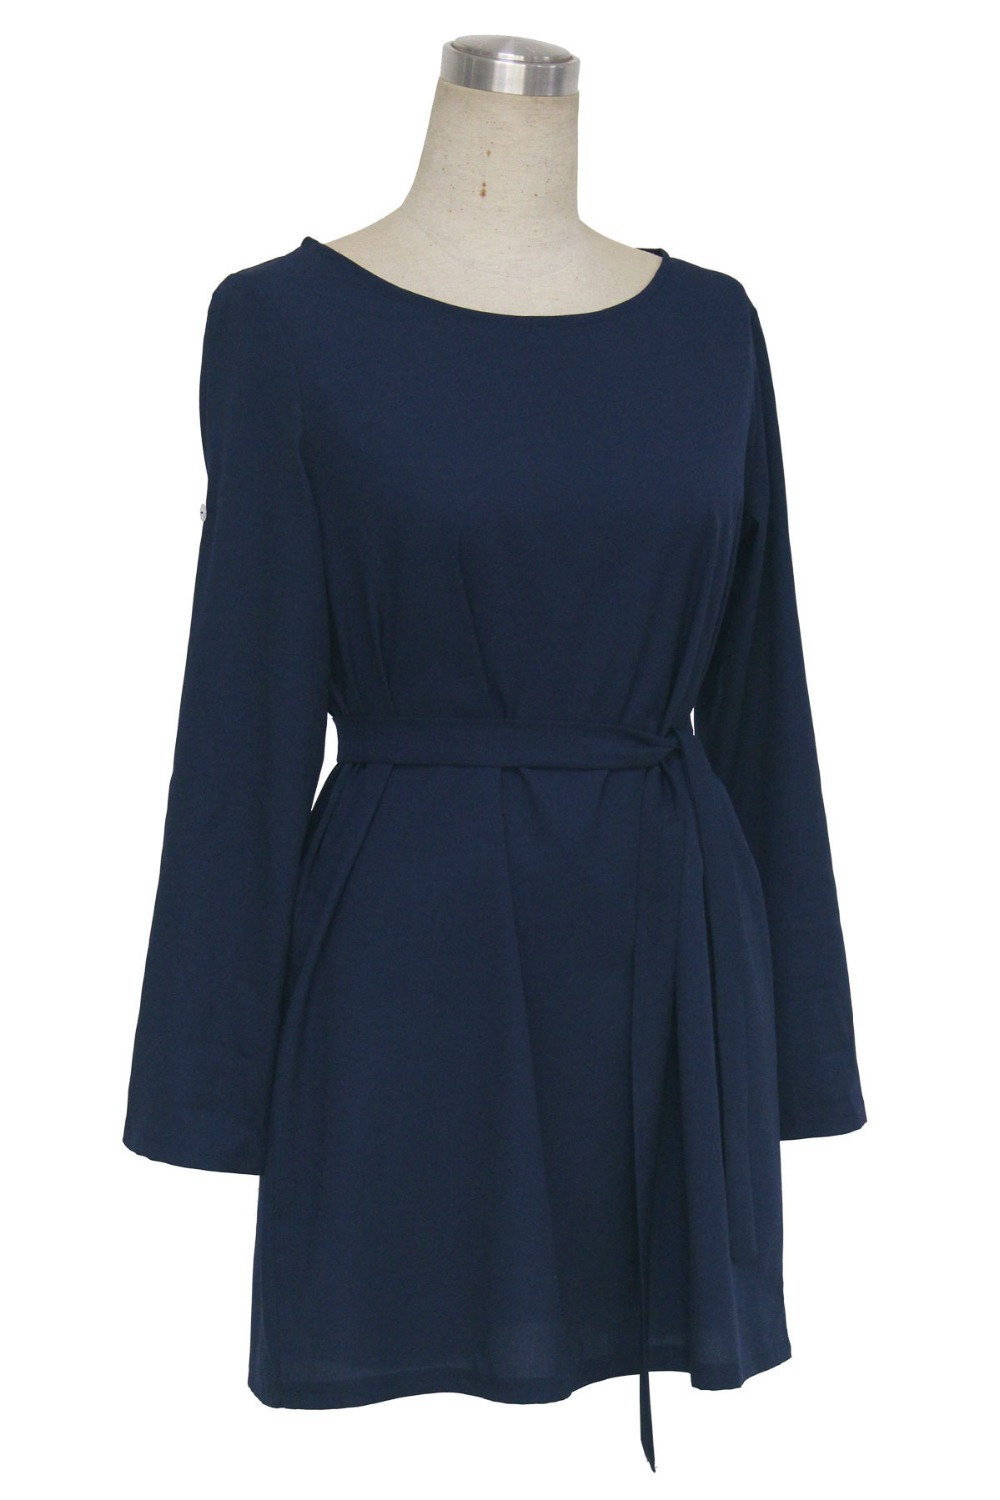 Fashion Women Elegant shirts Dresses With Belt Office Formal O-neck long Sleeve Casual Navy Blue Plus Size